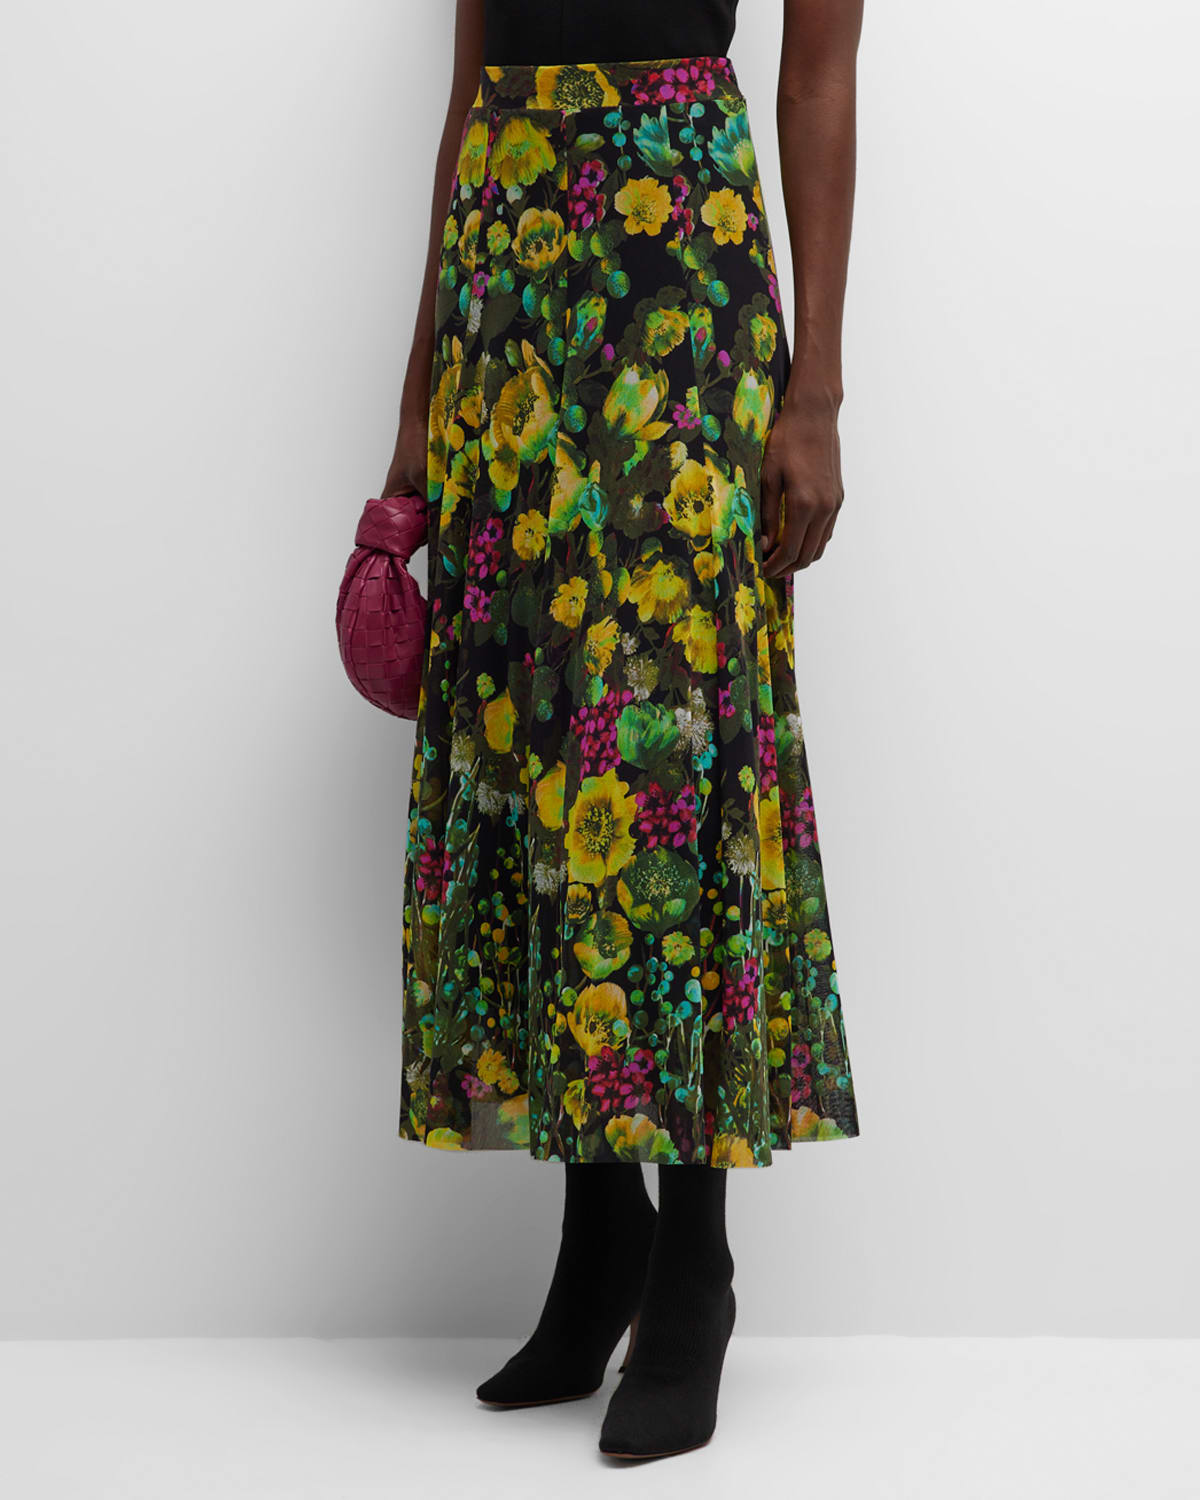 Fuzzi One-Shoulder Floral-Print Tulle Maxi Dress | Neiman Marcus